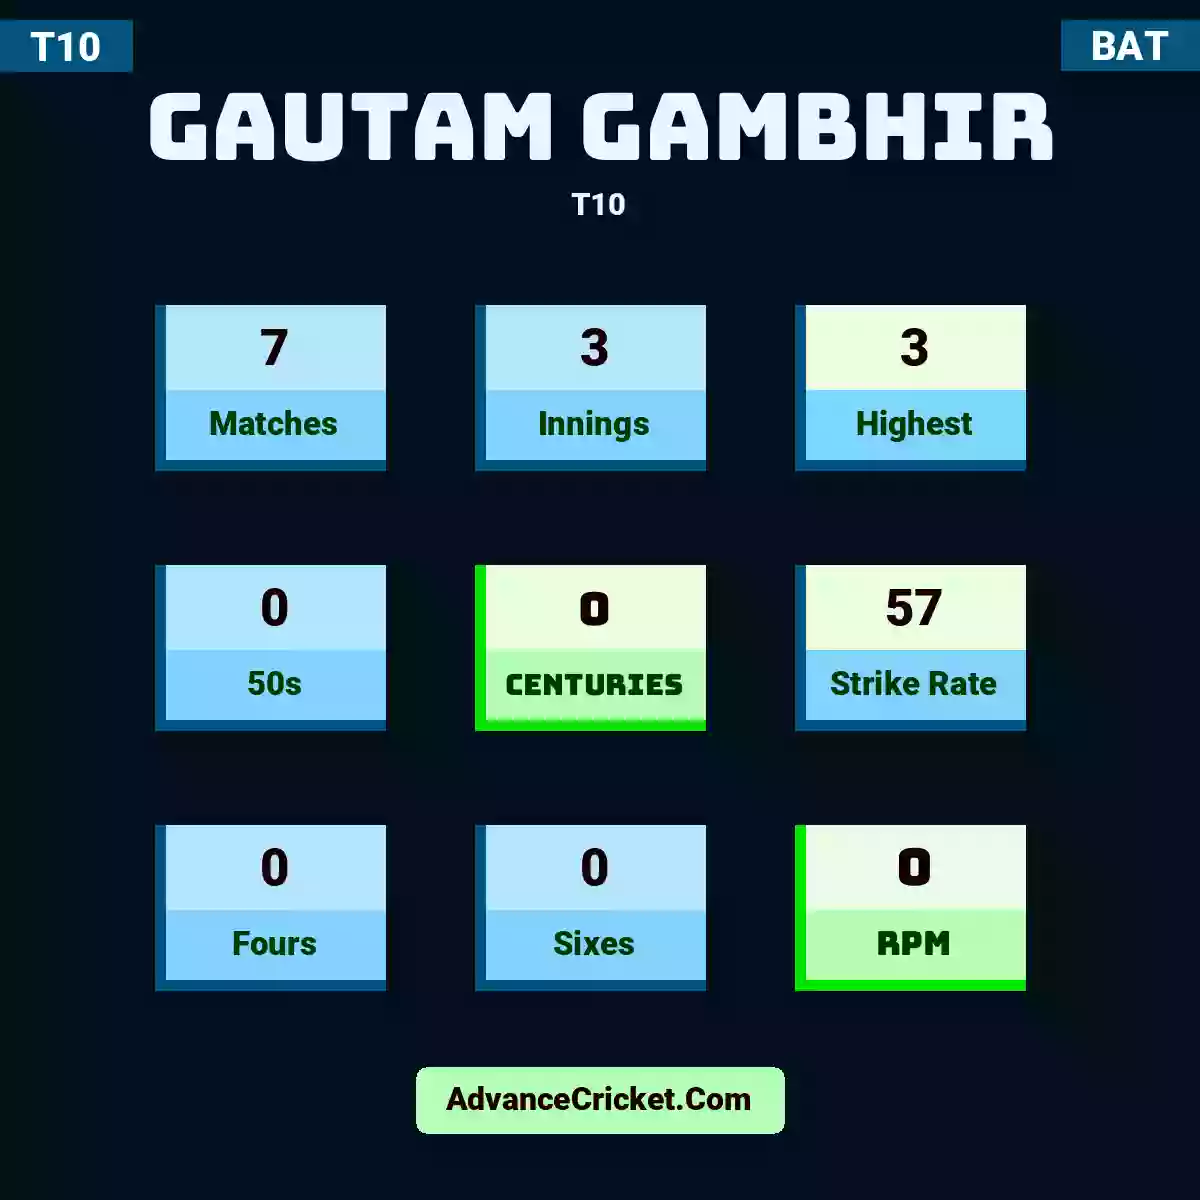 Gautam Gambhir T10 , Gautam Gambhir played 7 matches, scored 3 runs as highest, 0 half-centuries, and 0 centuries, with a strike rate of 57. G.Gambhir hit 0 fours and 0 sixes, with an RPM of 0.